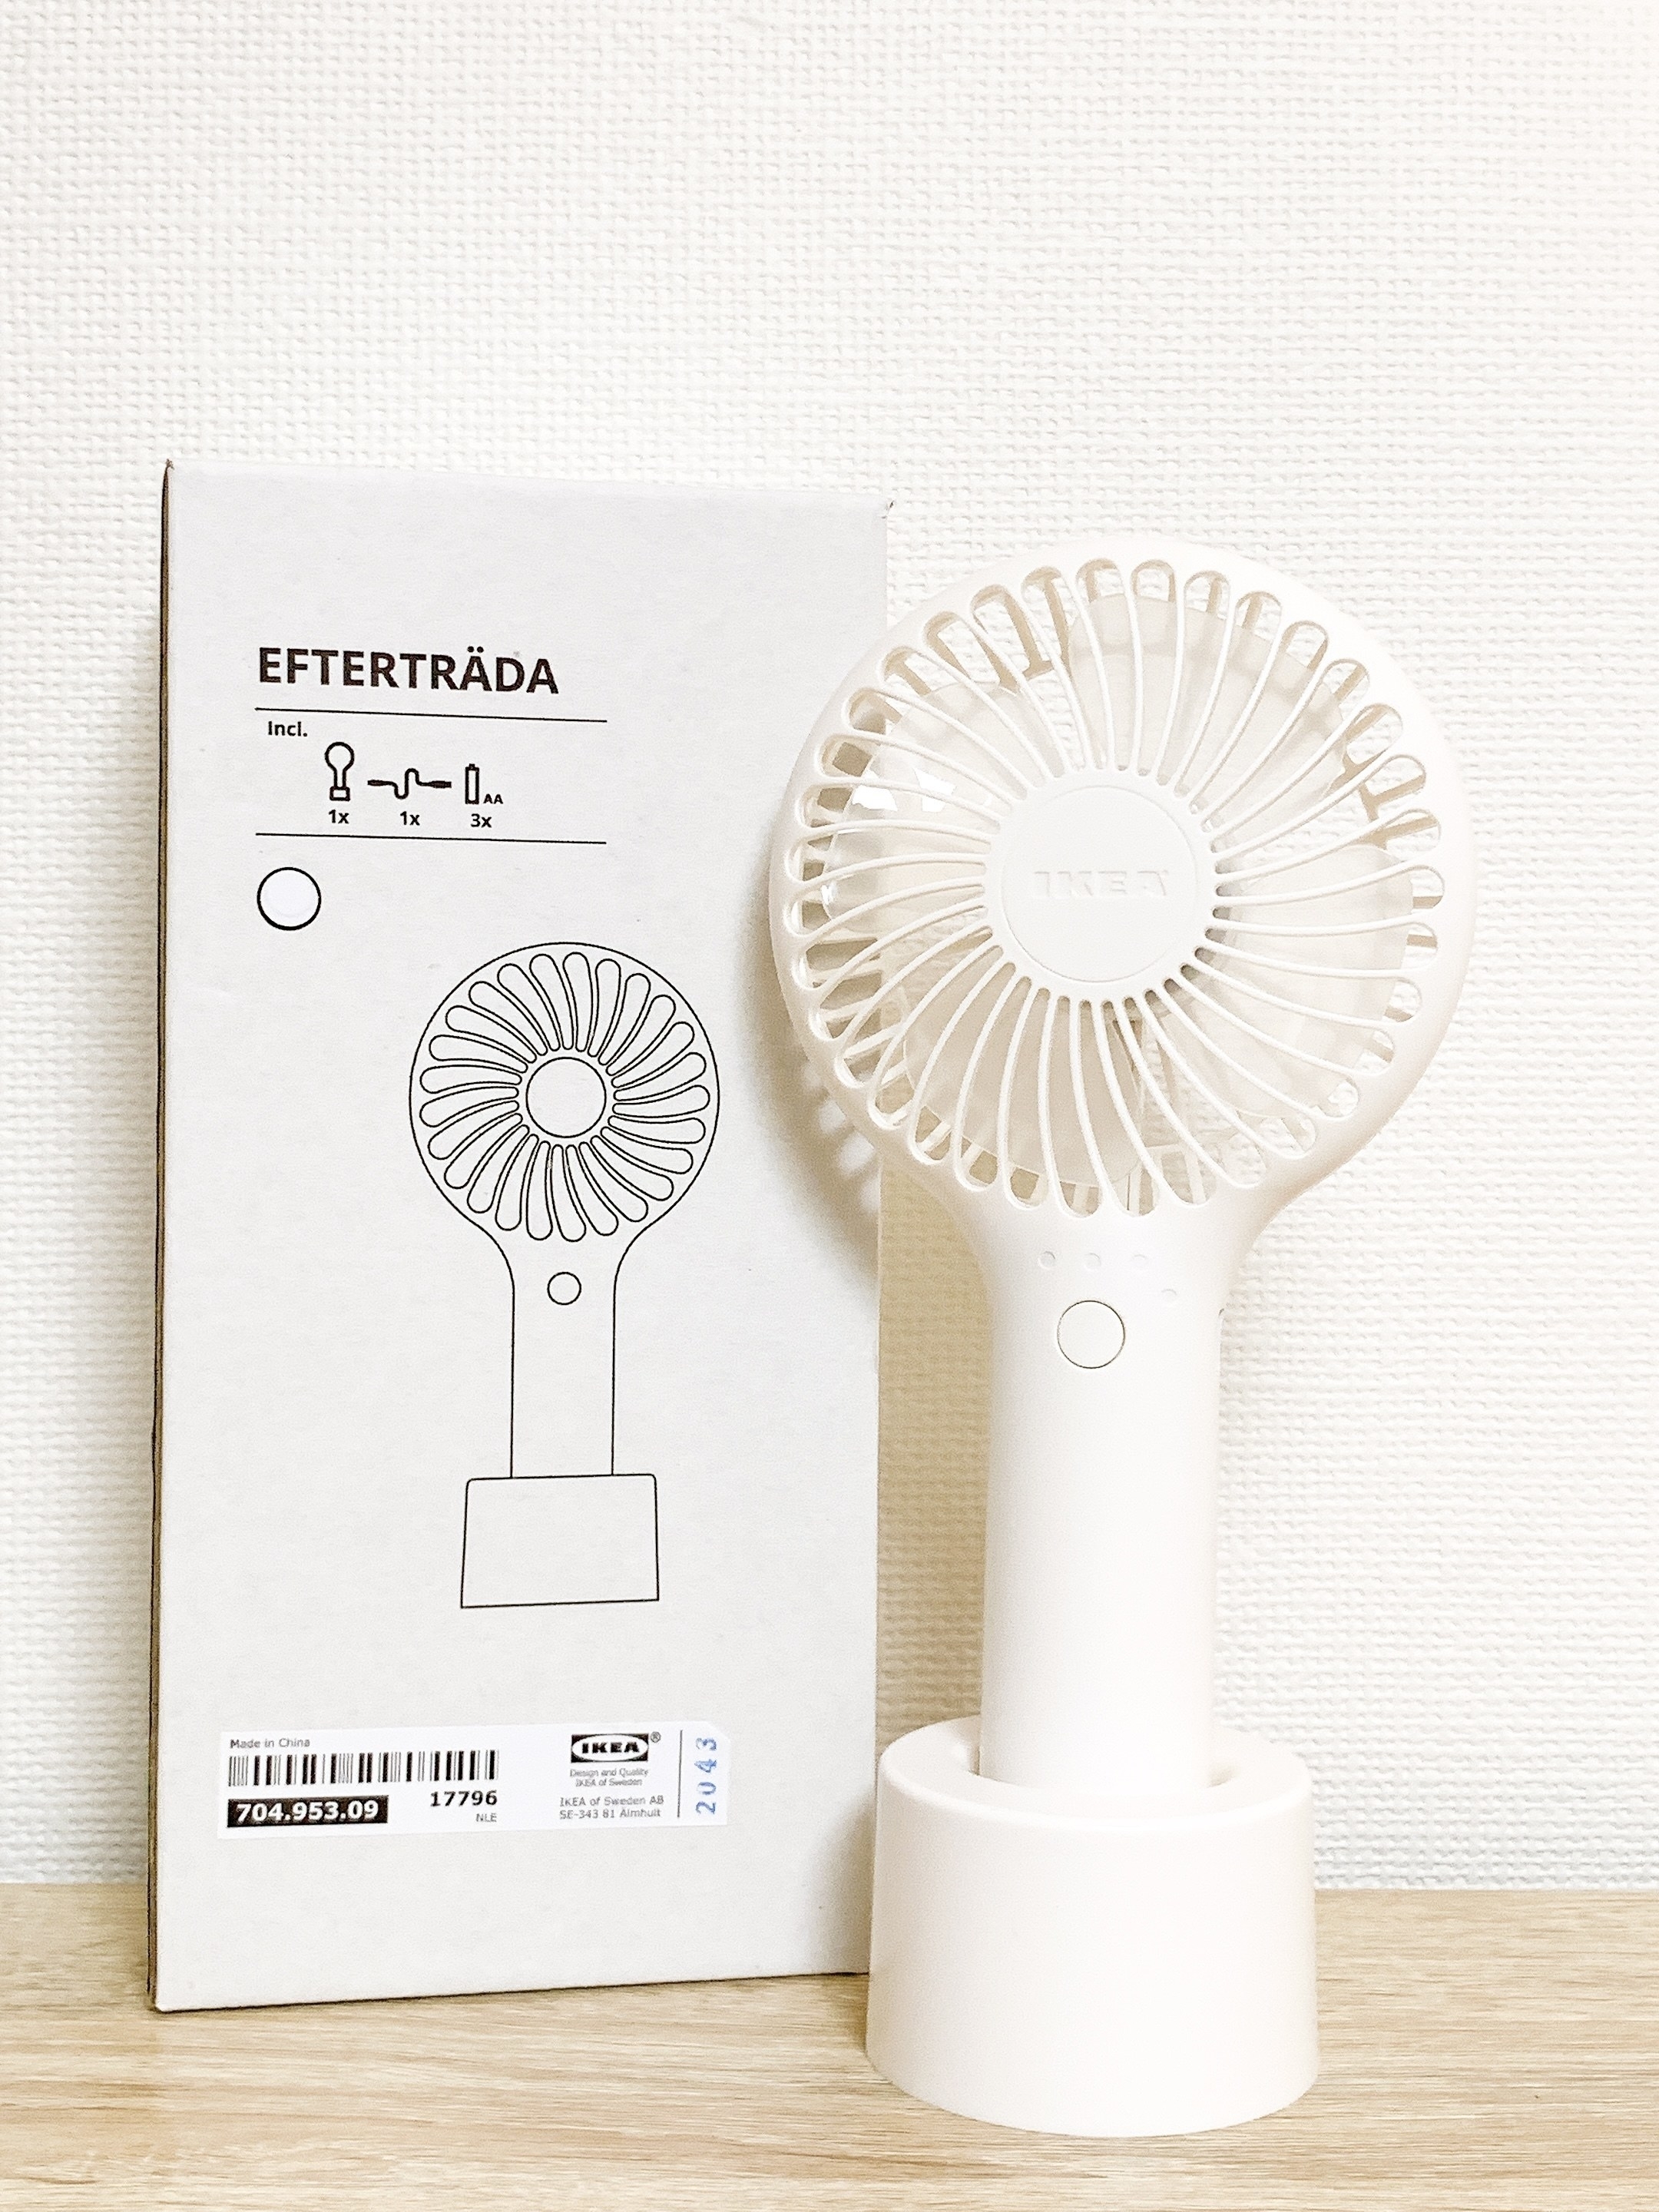 IKEA（イケア）のおすすめの便利アイテム「エフテルトレーダ」